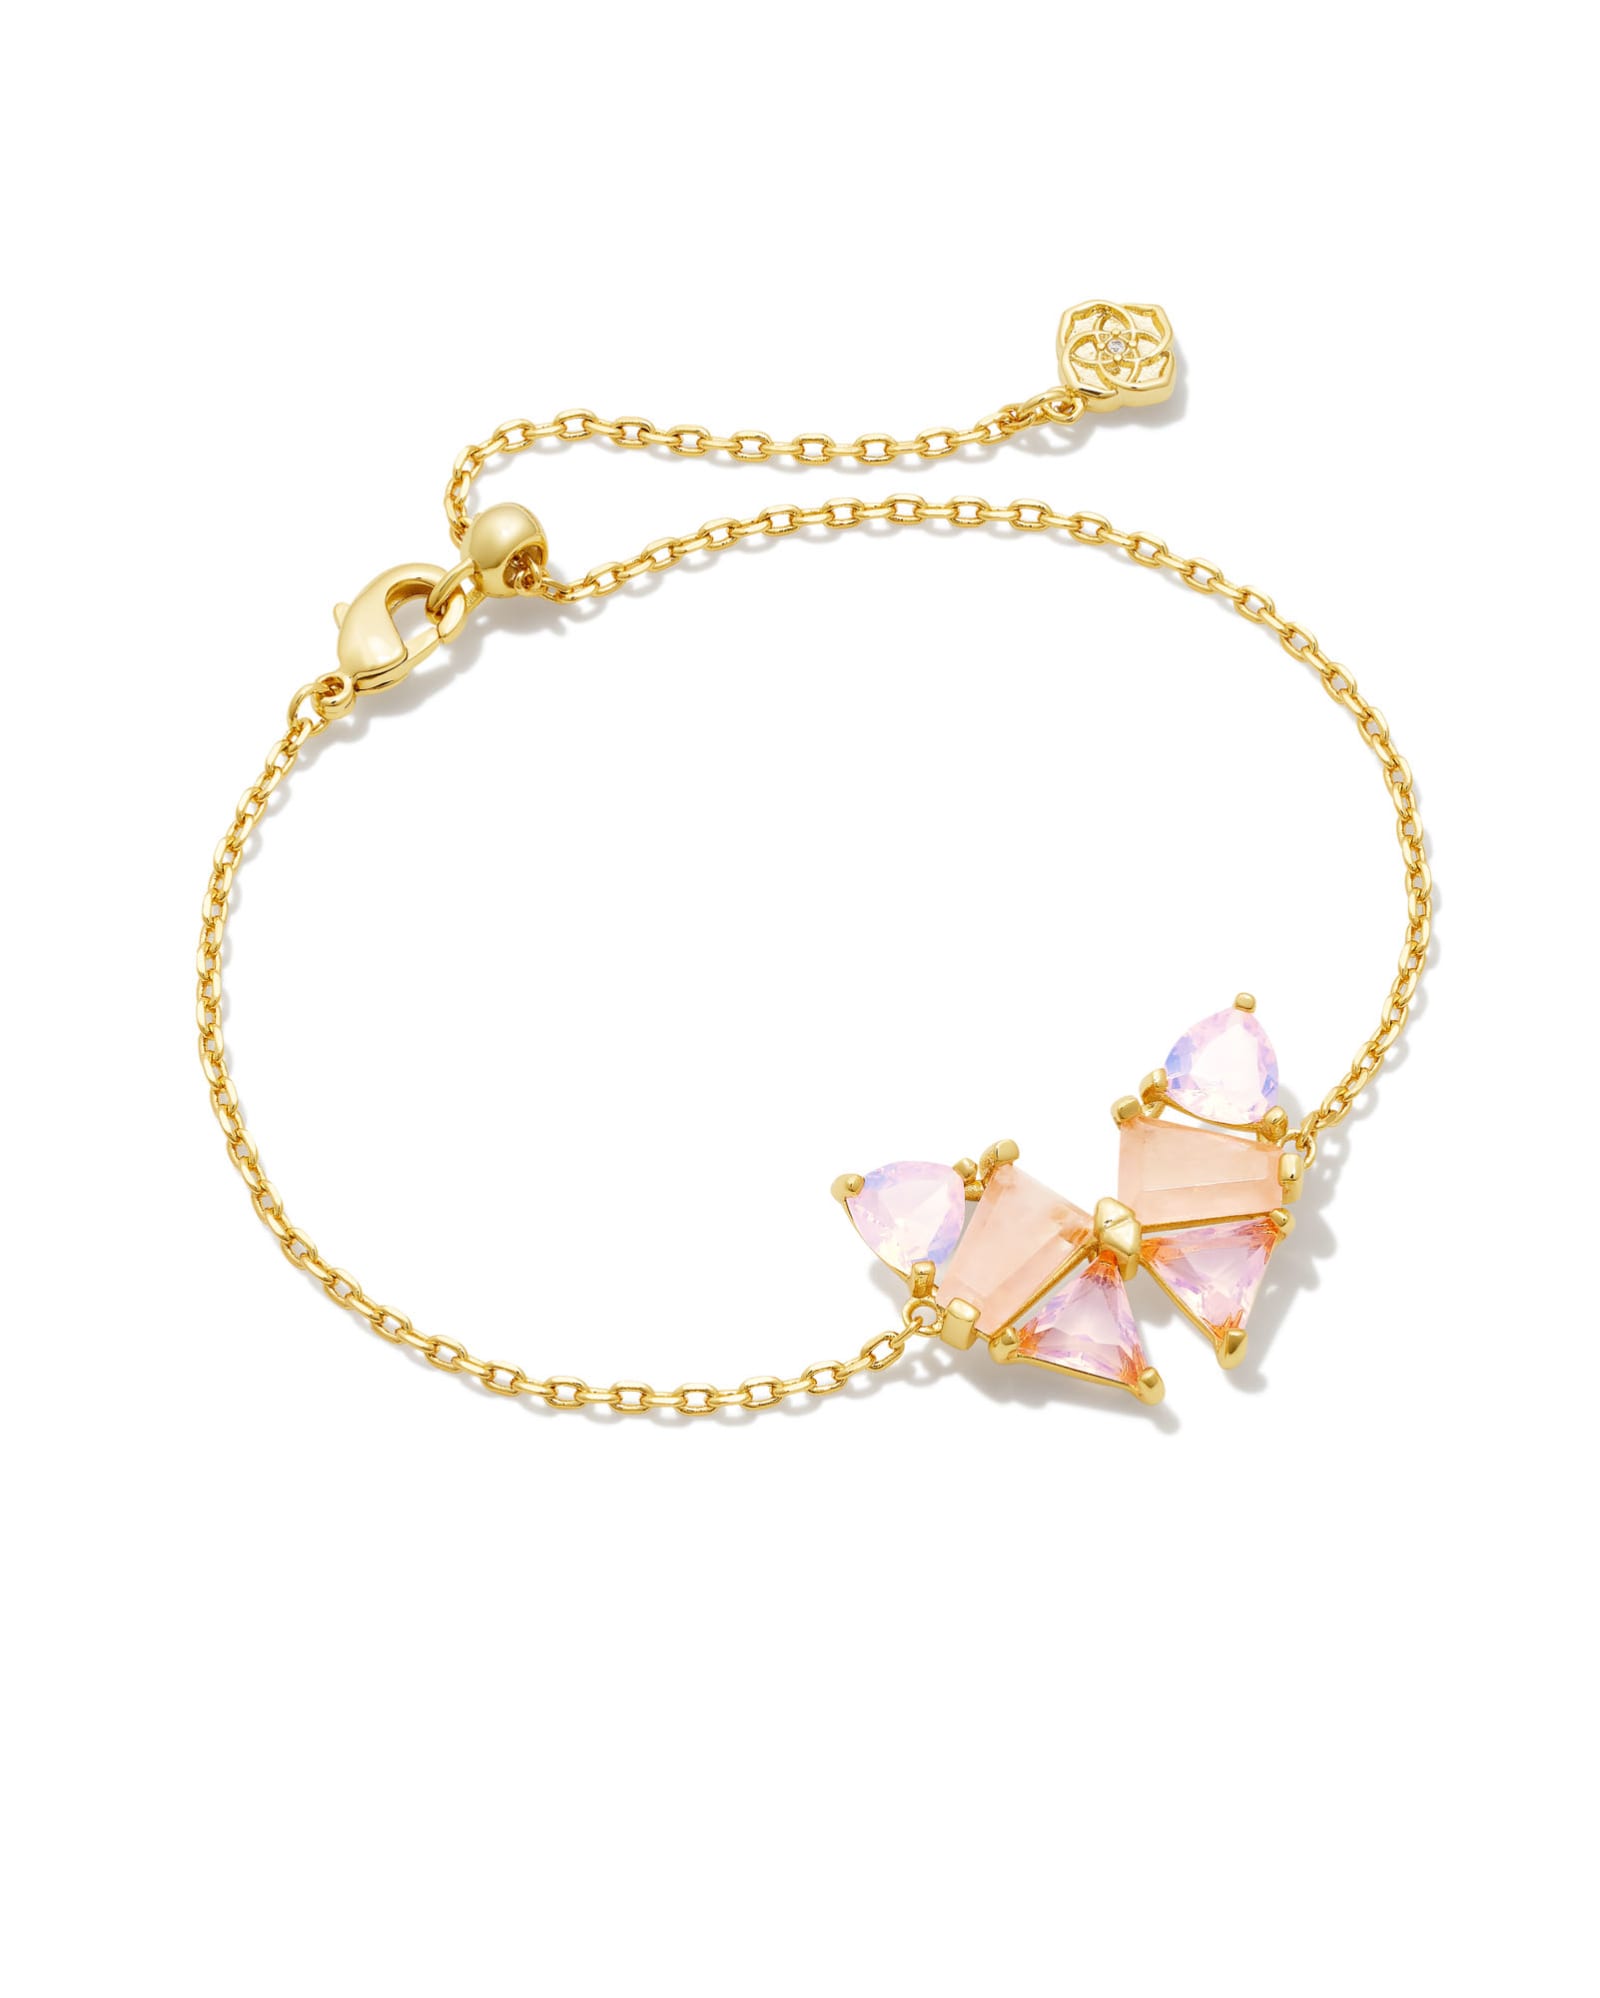 Blair Gold Butterfly Delicate Chain Bracelet in Pink Mix | Kendra Scott